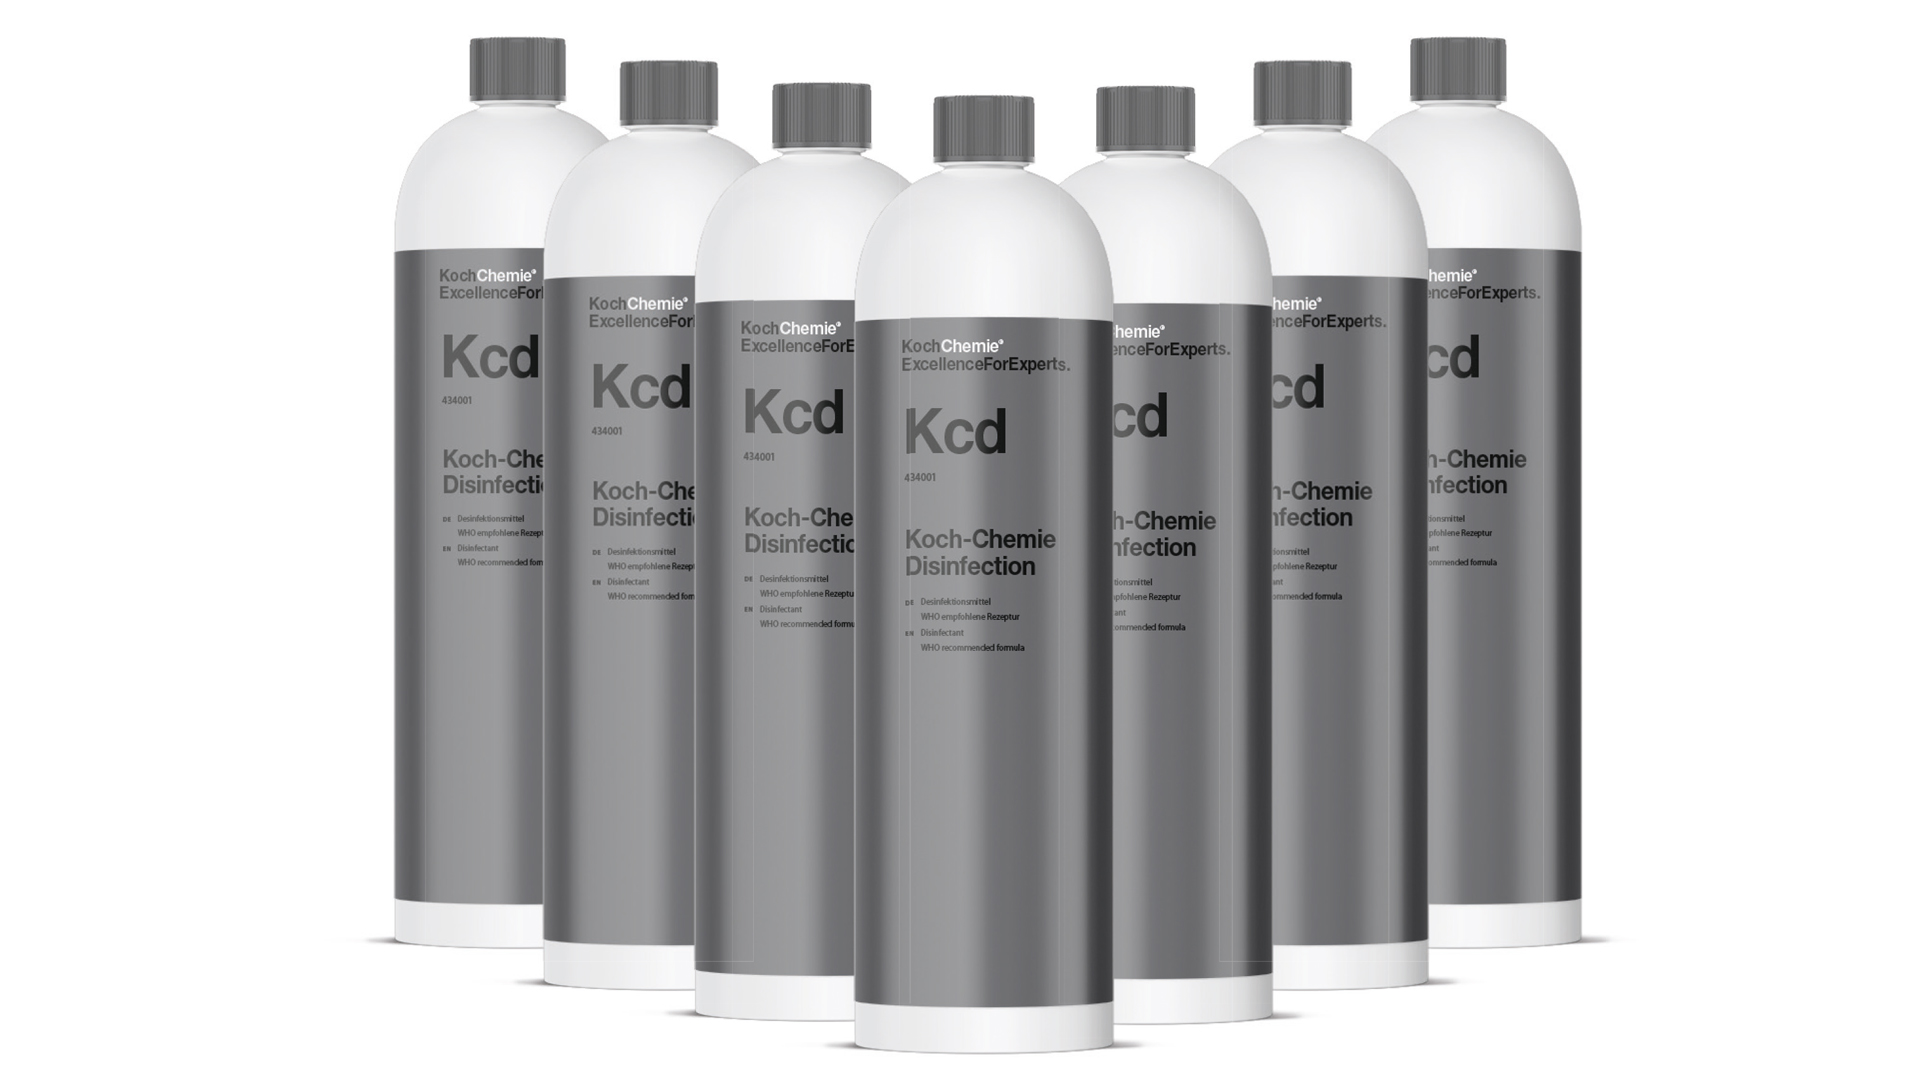 Koch-Chemie Disinfection Kcd - Desinfektionsmittel nach WHO-empfohlener Rezeptur